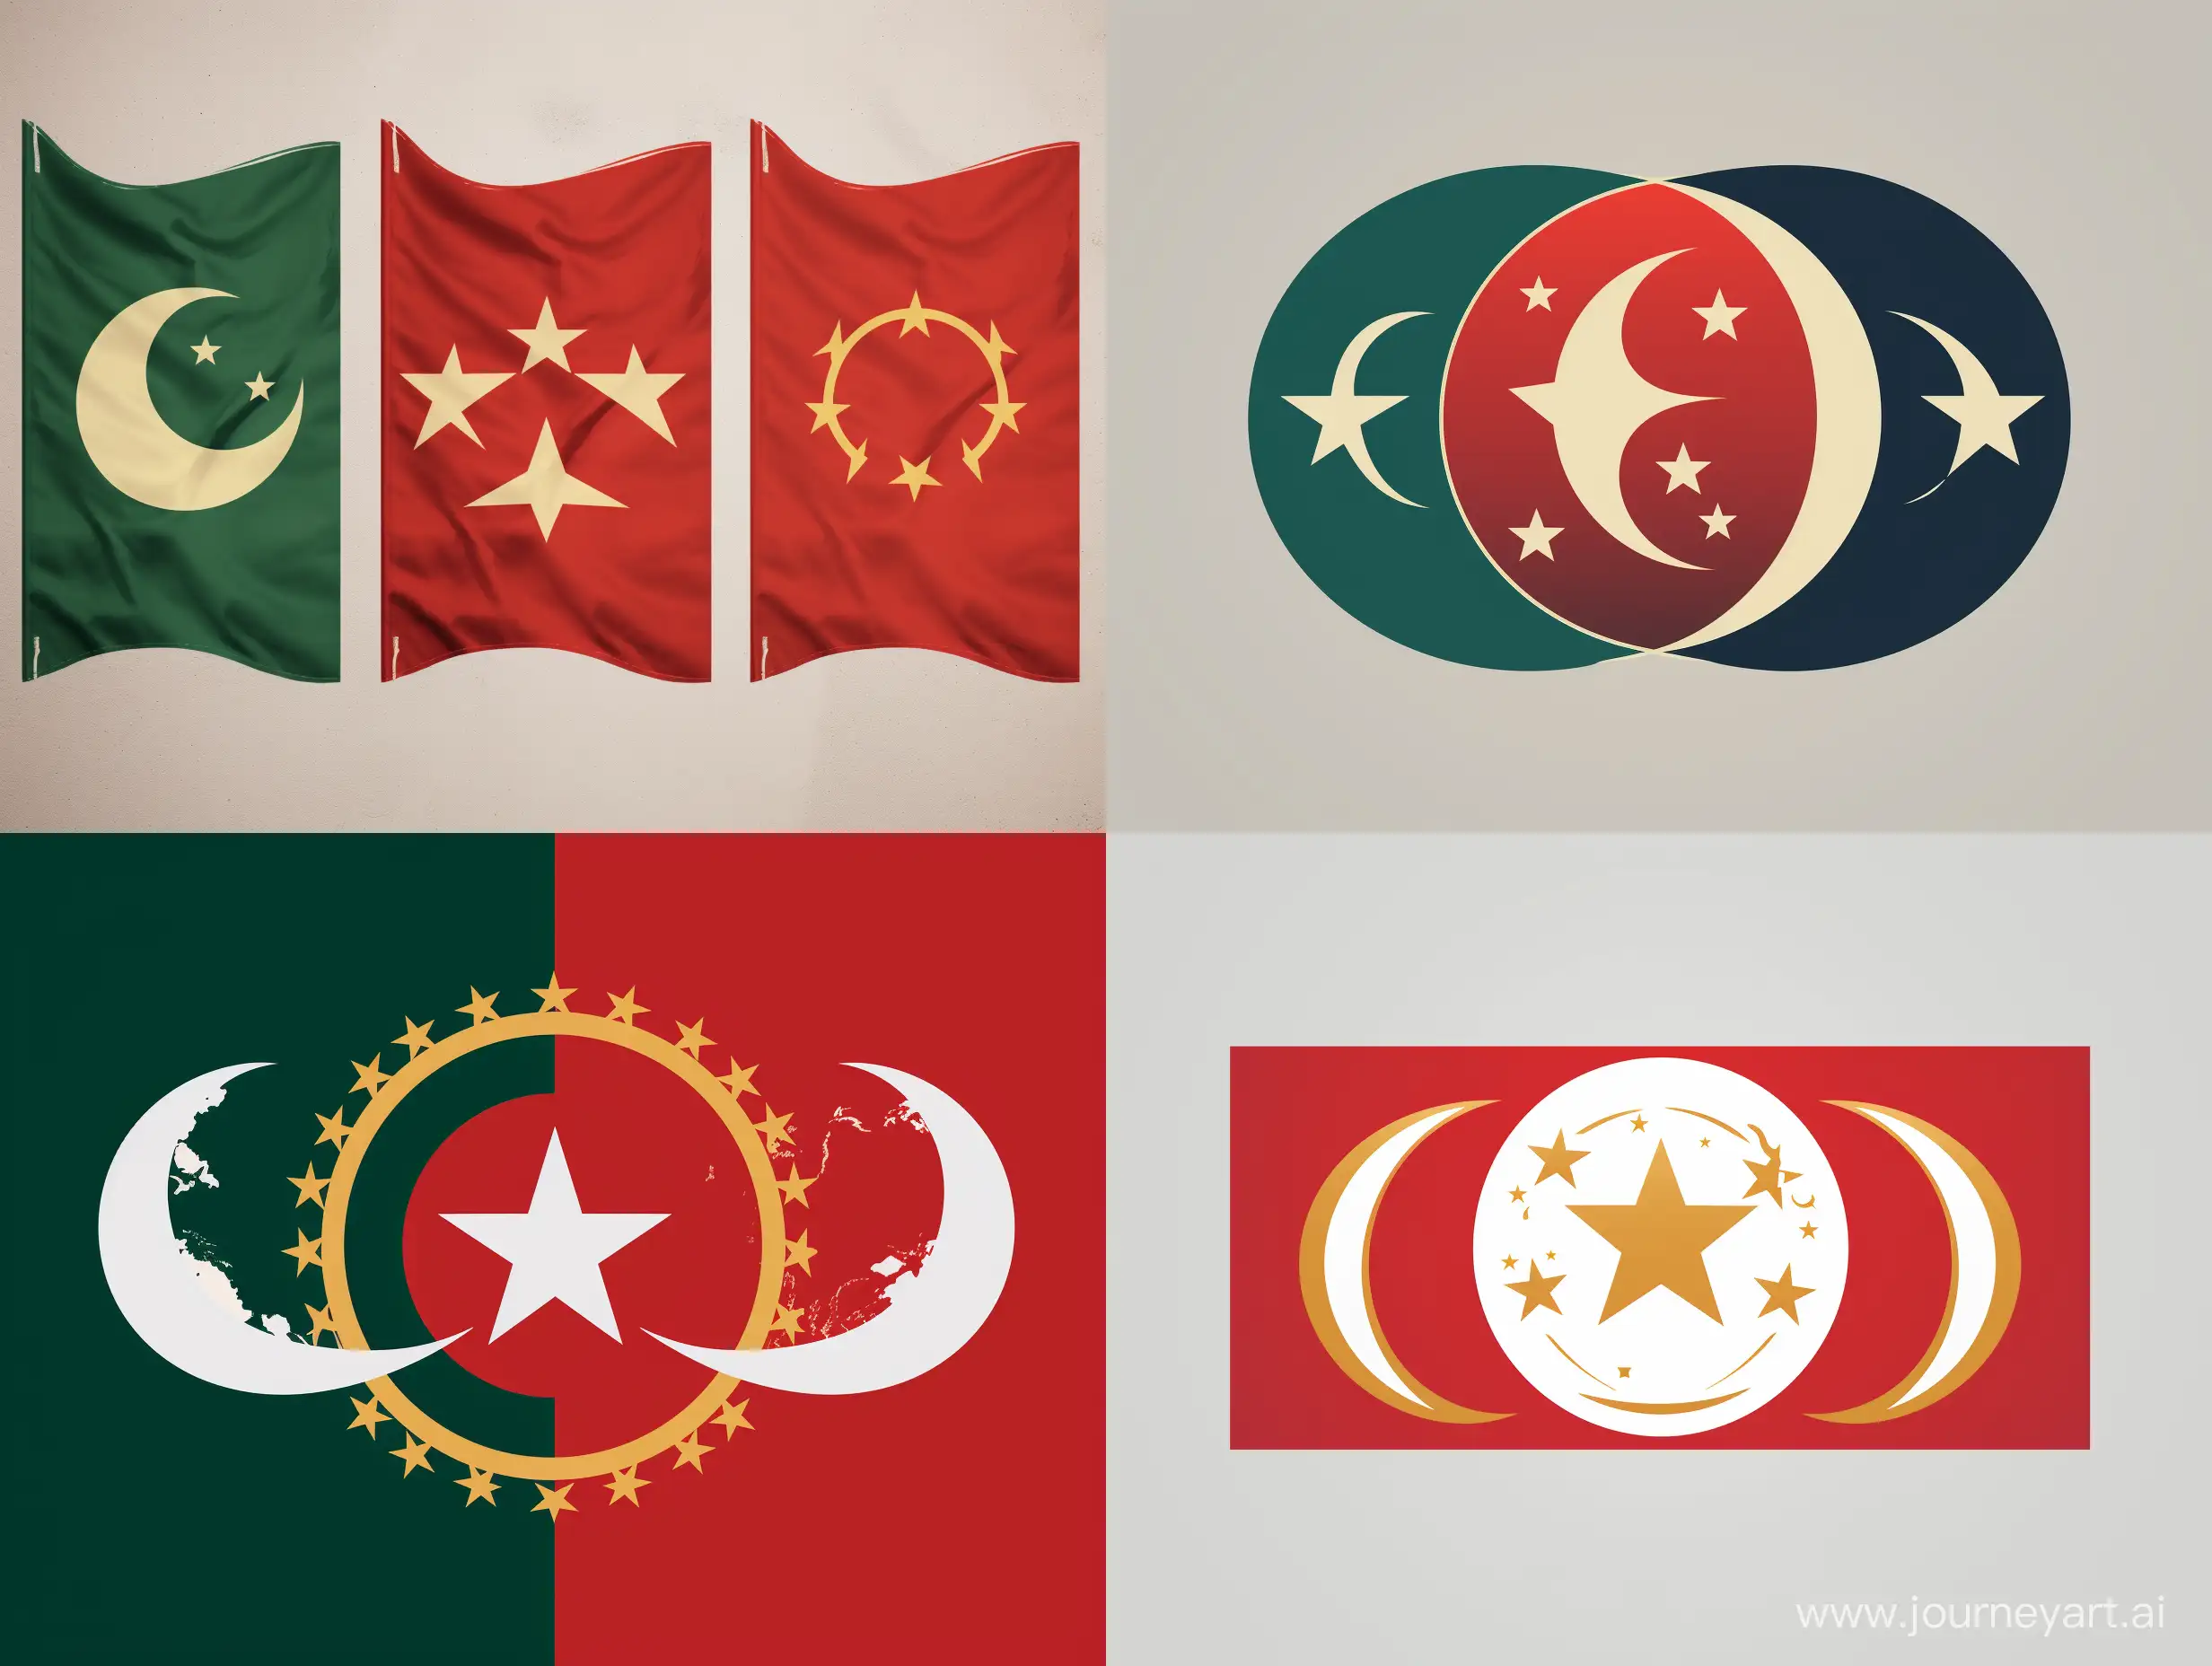 United-Flags-of-Morocco-Algeria-Tunisia-Symbolizing-Unity-in-Colors-and-Symbols